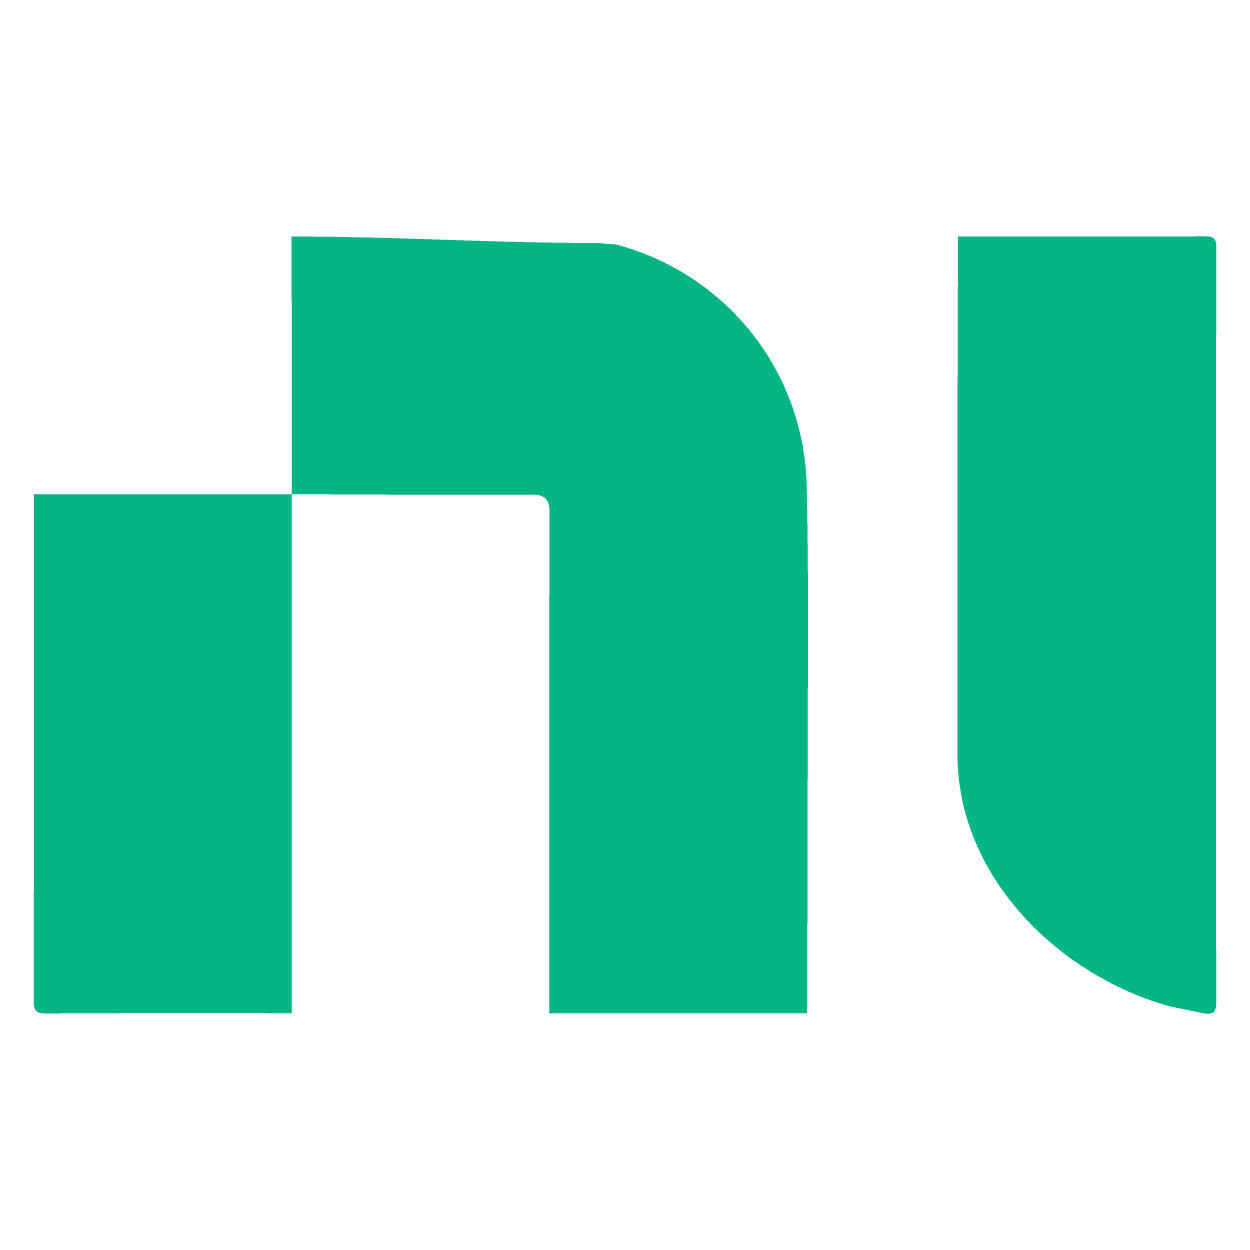 nationalinstruments-logo.png